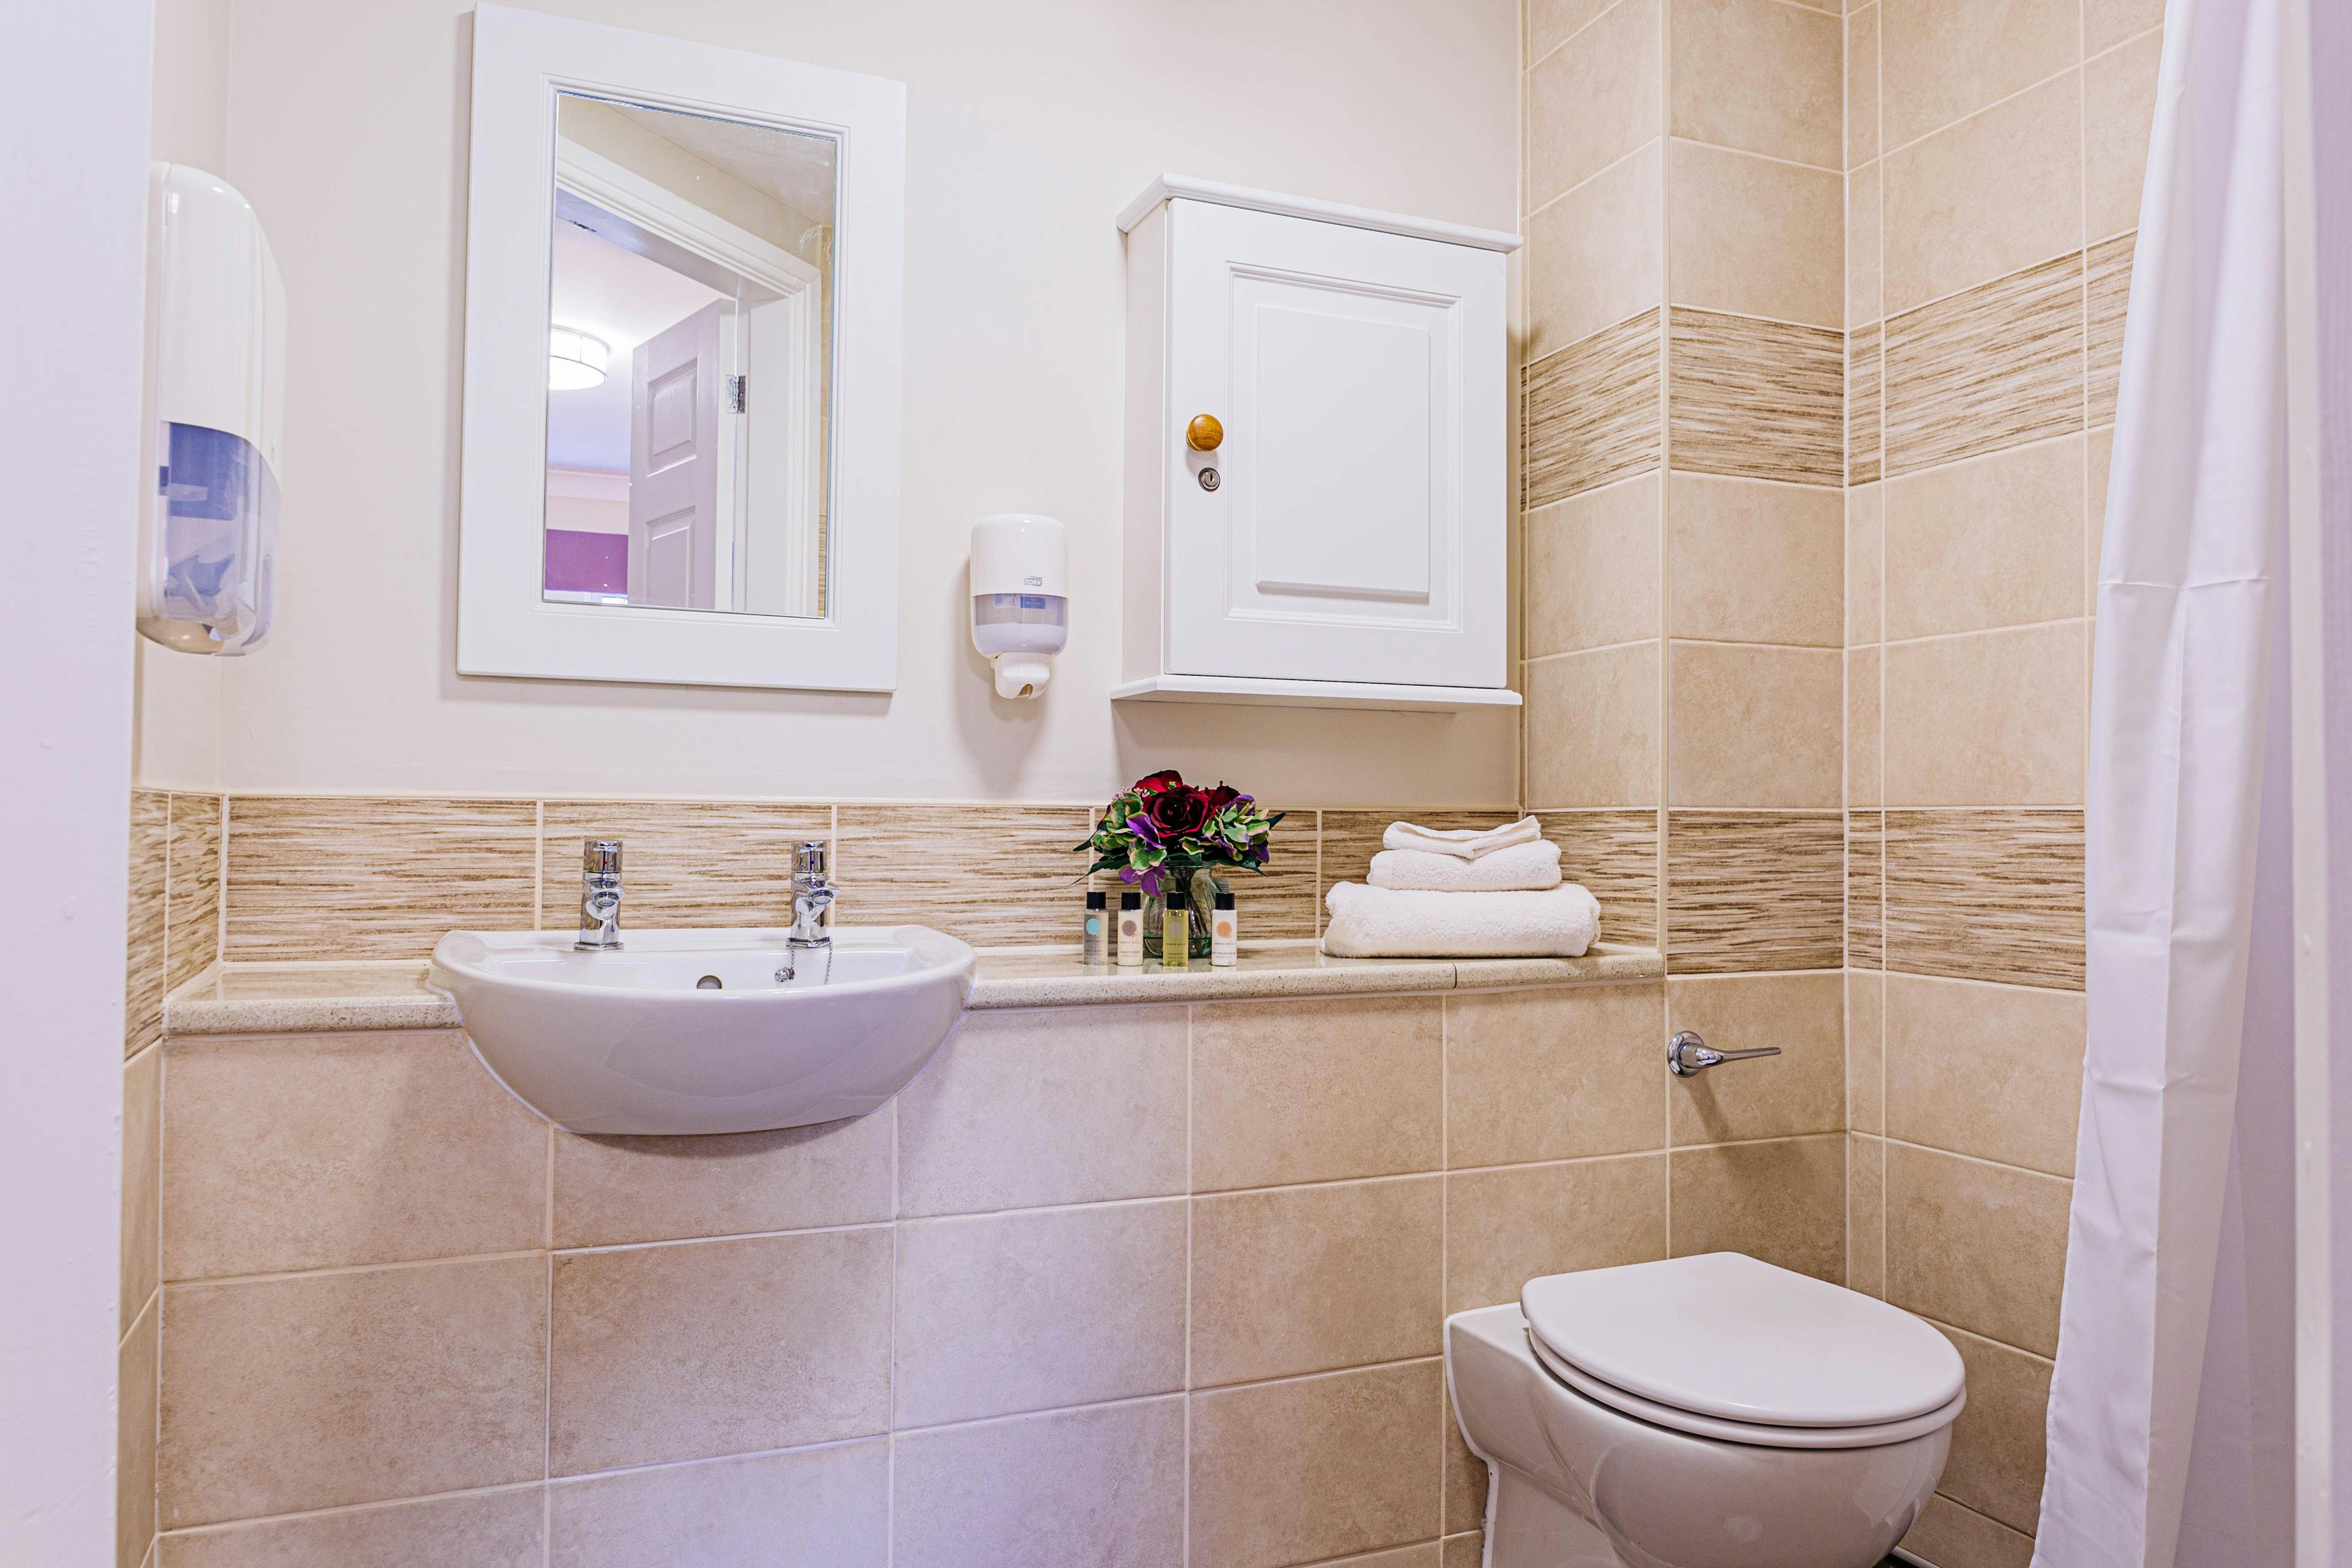 Bathroom of Leeming Bar Grange Care Home in Northallerton, Hambleton